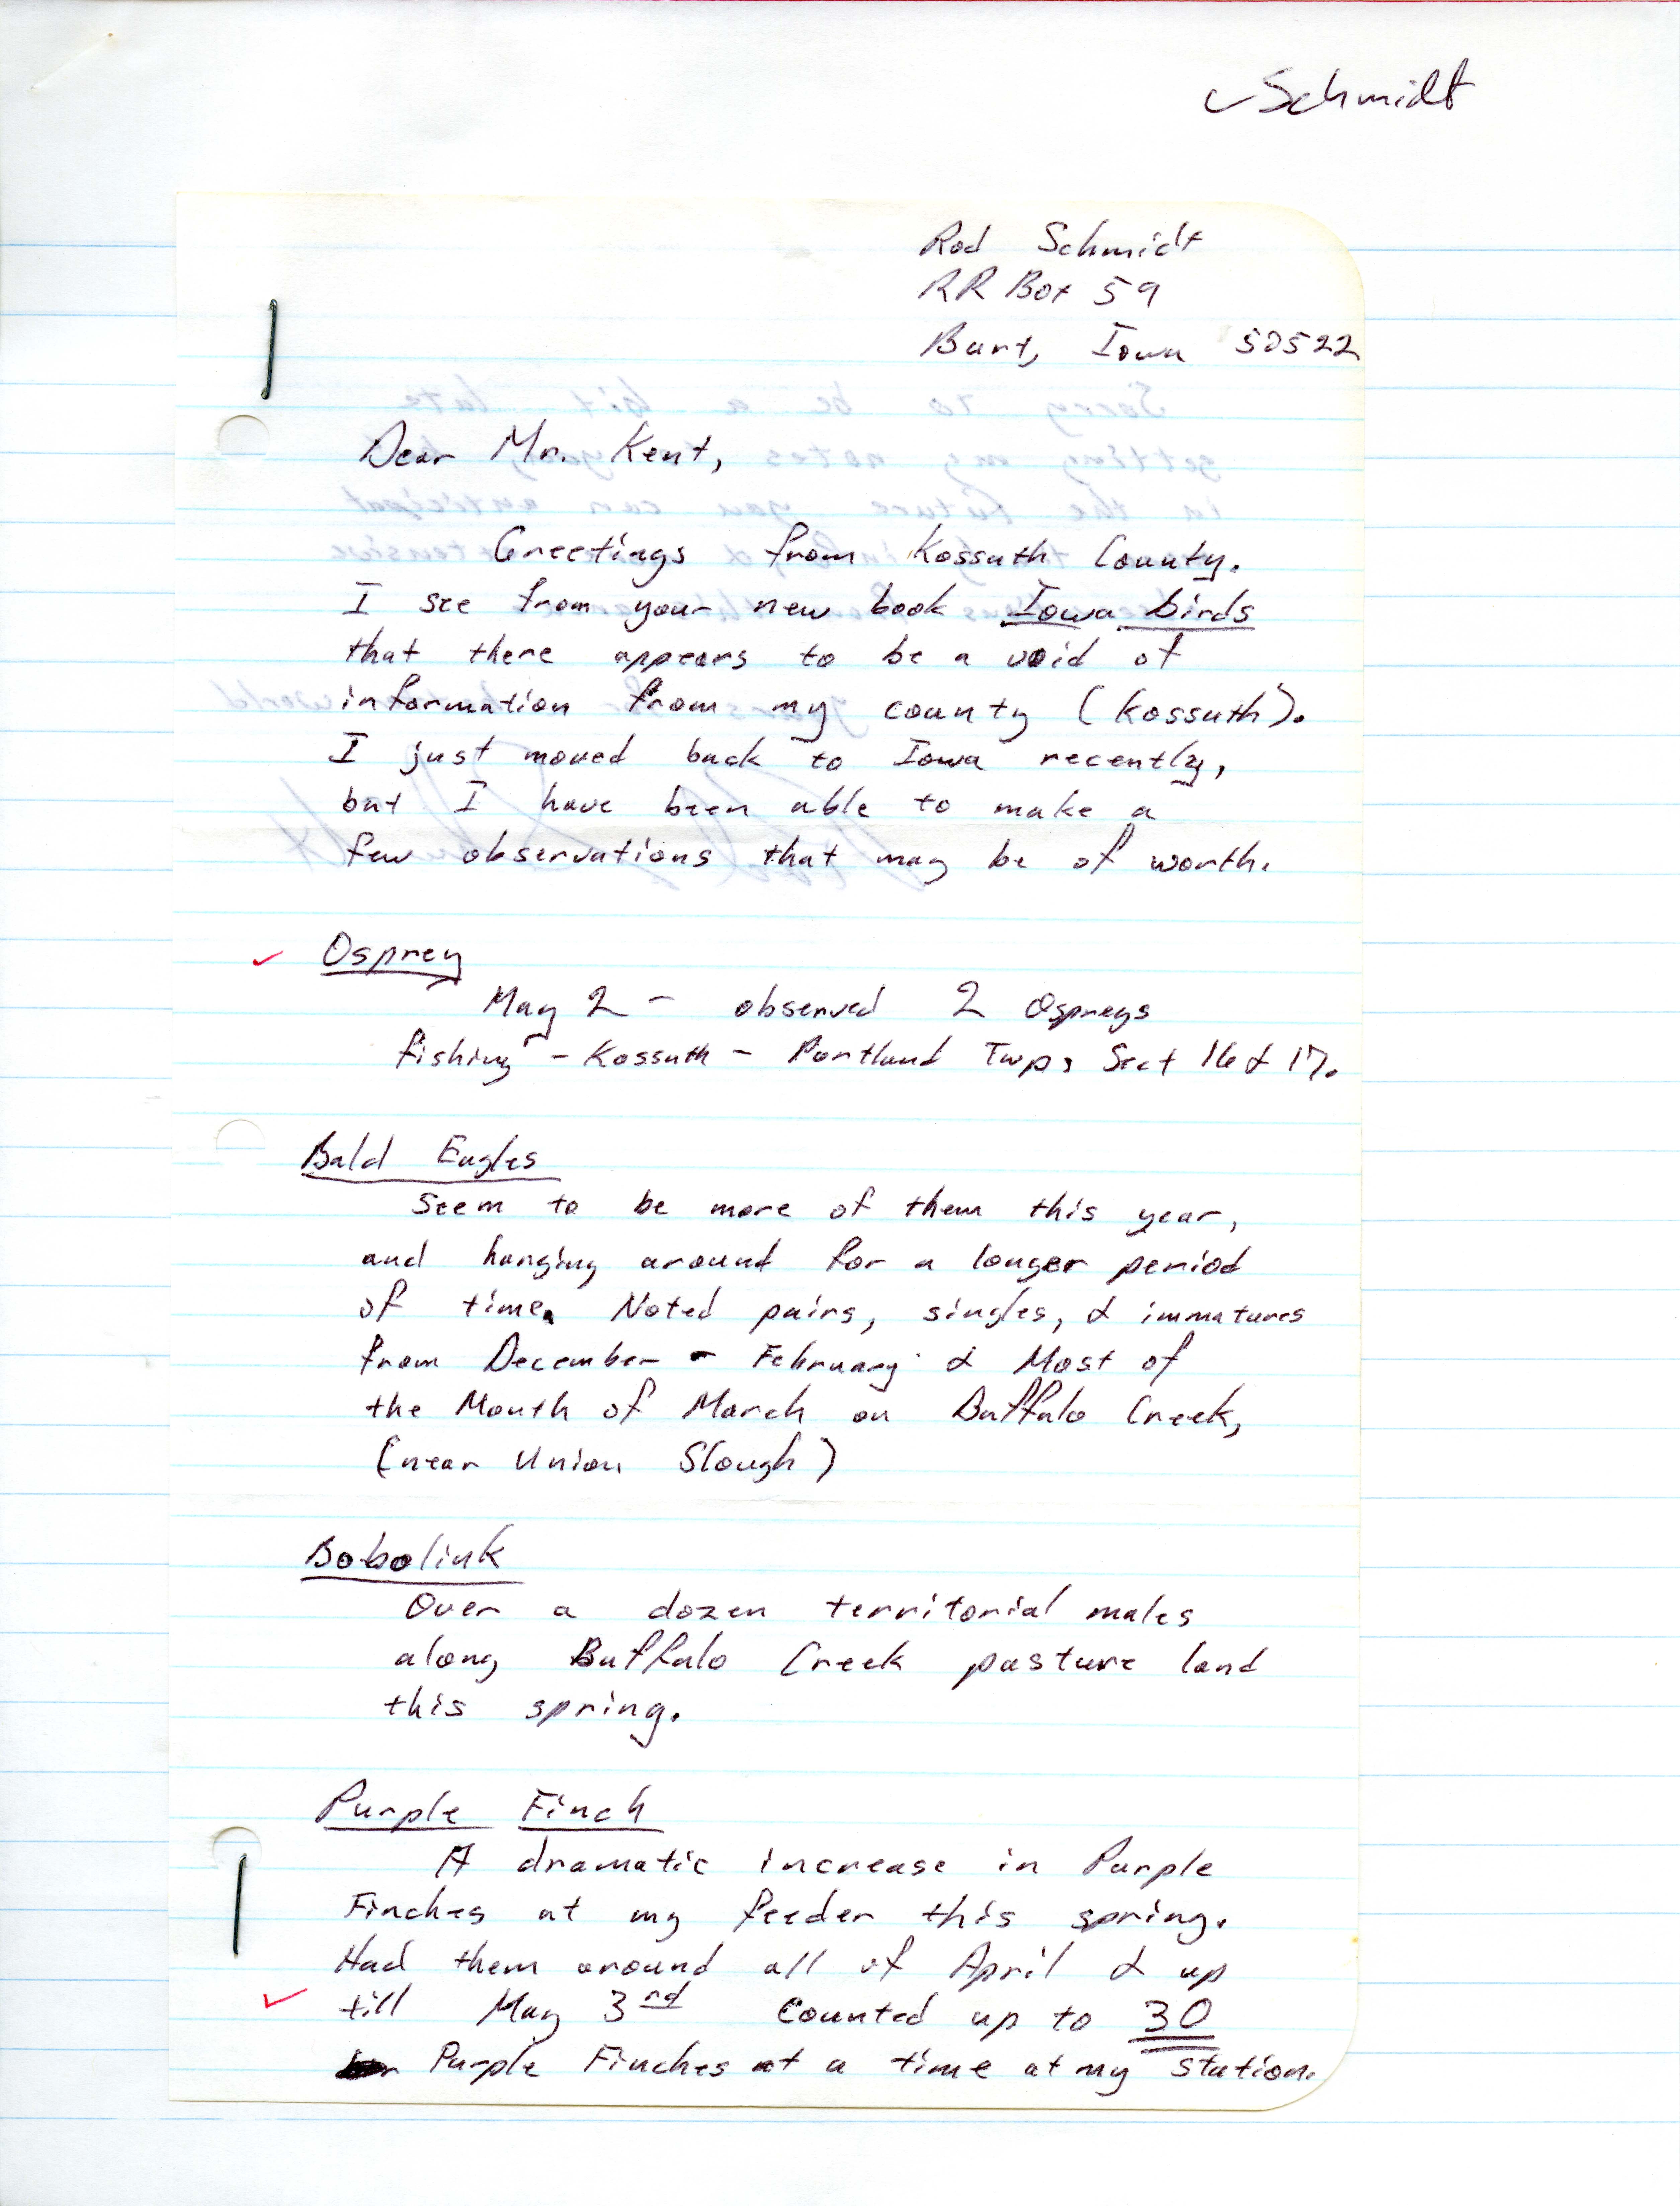 Rod Schmidt letter to Thomas H. Kent regarding Kossuth County bird sightings, spring 1984